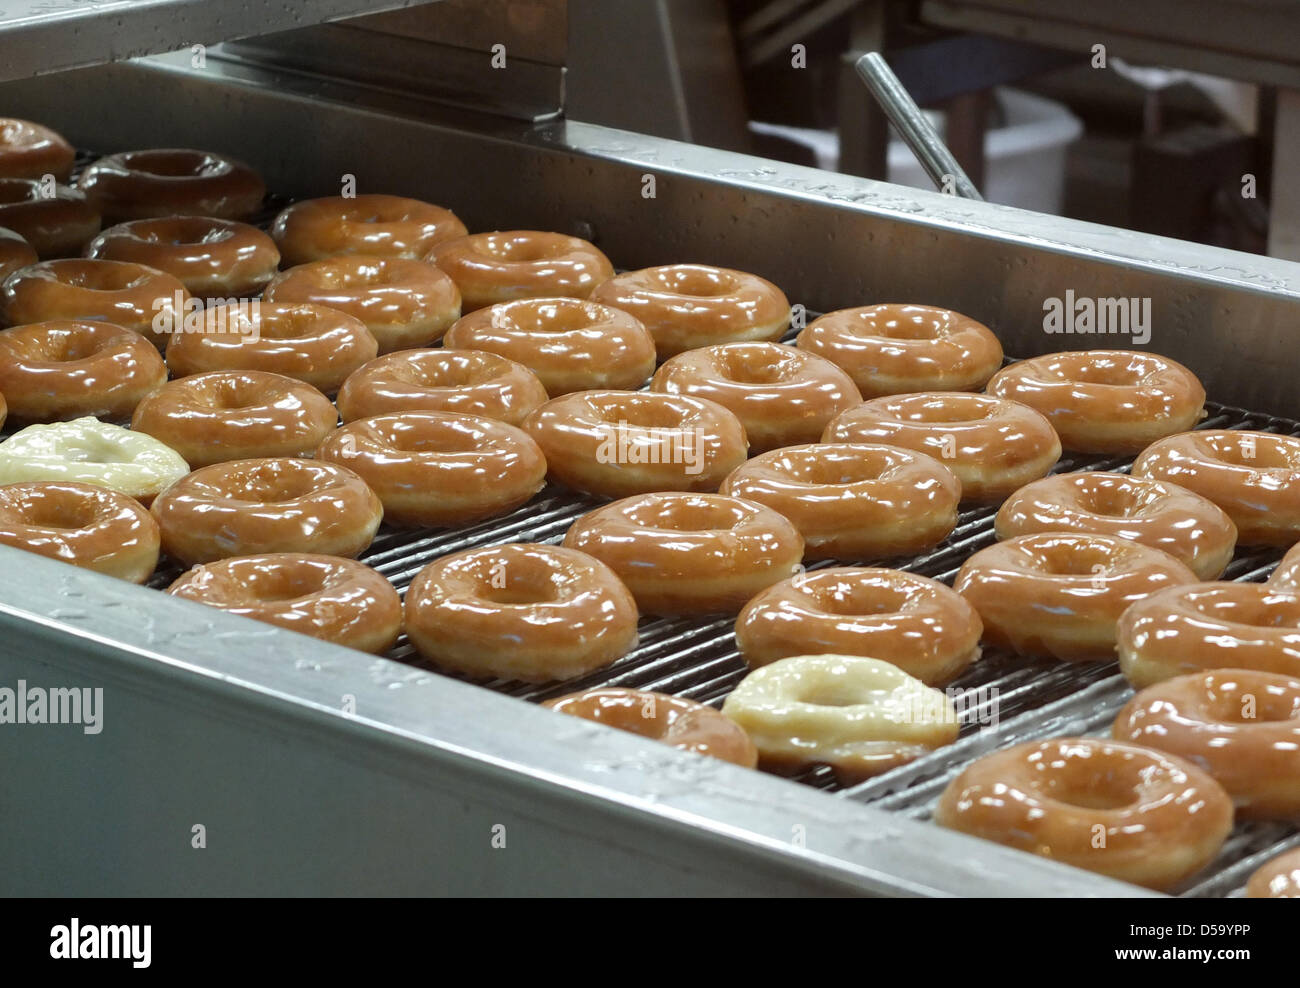 Krispy kreme doughnuts hi-res stock photography and images - Alamy